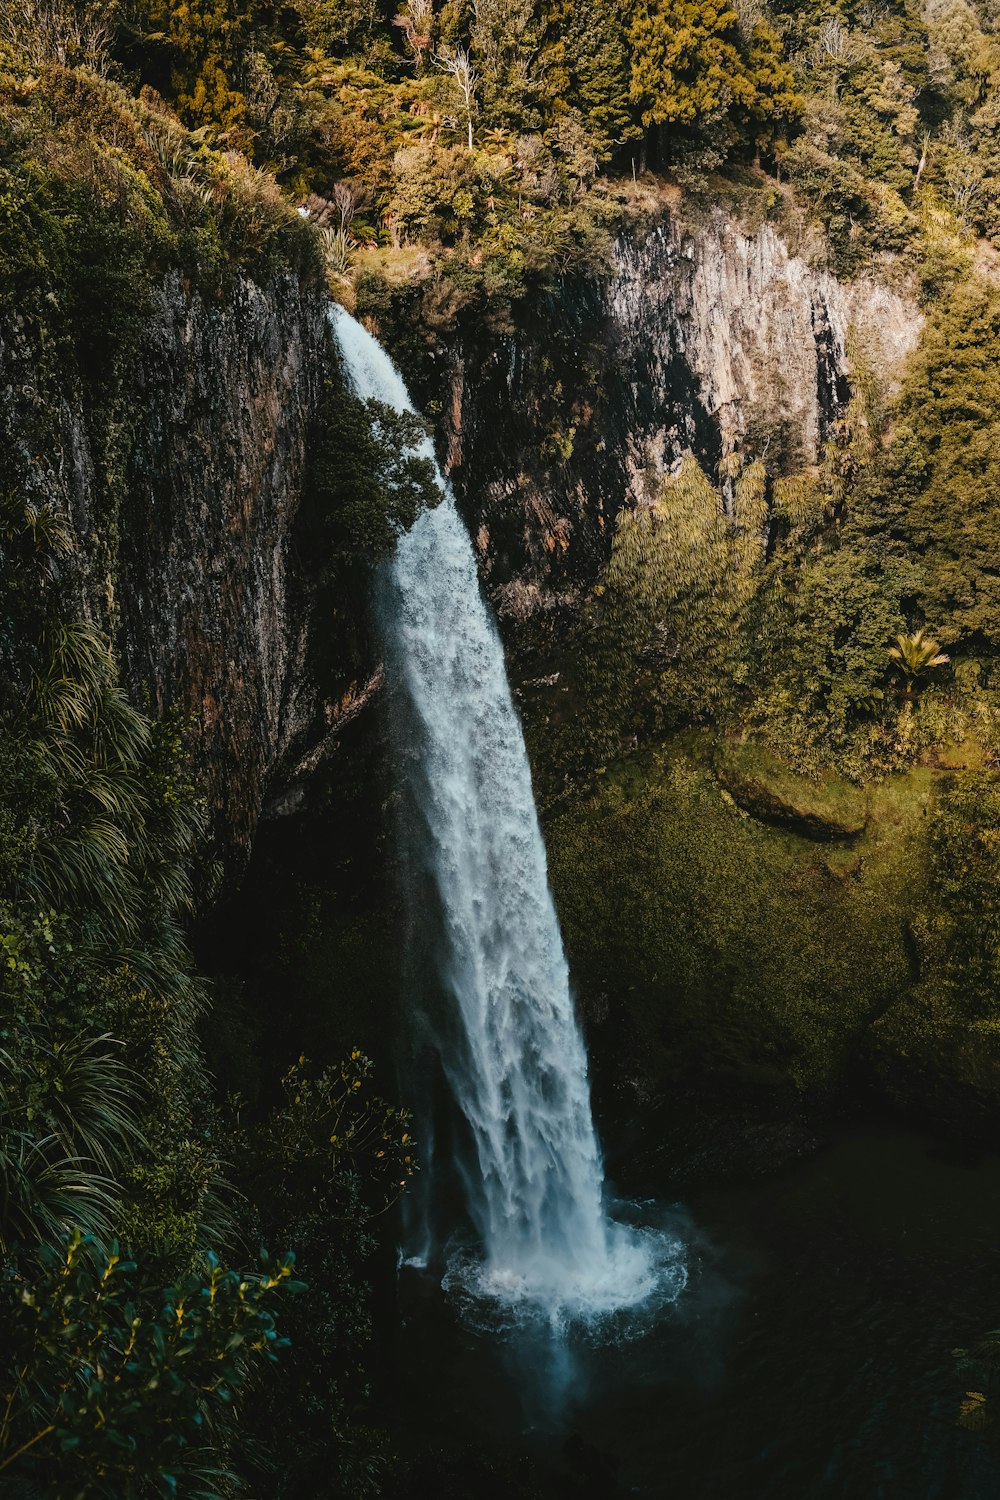 water flowing in falls